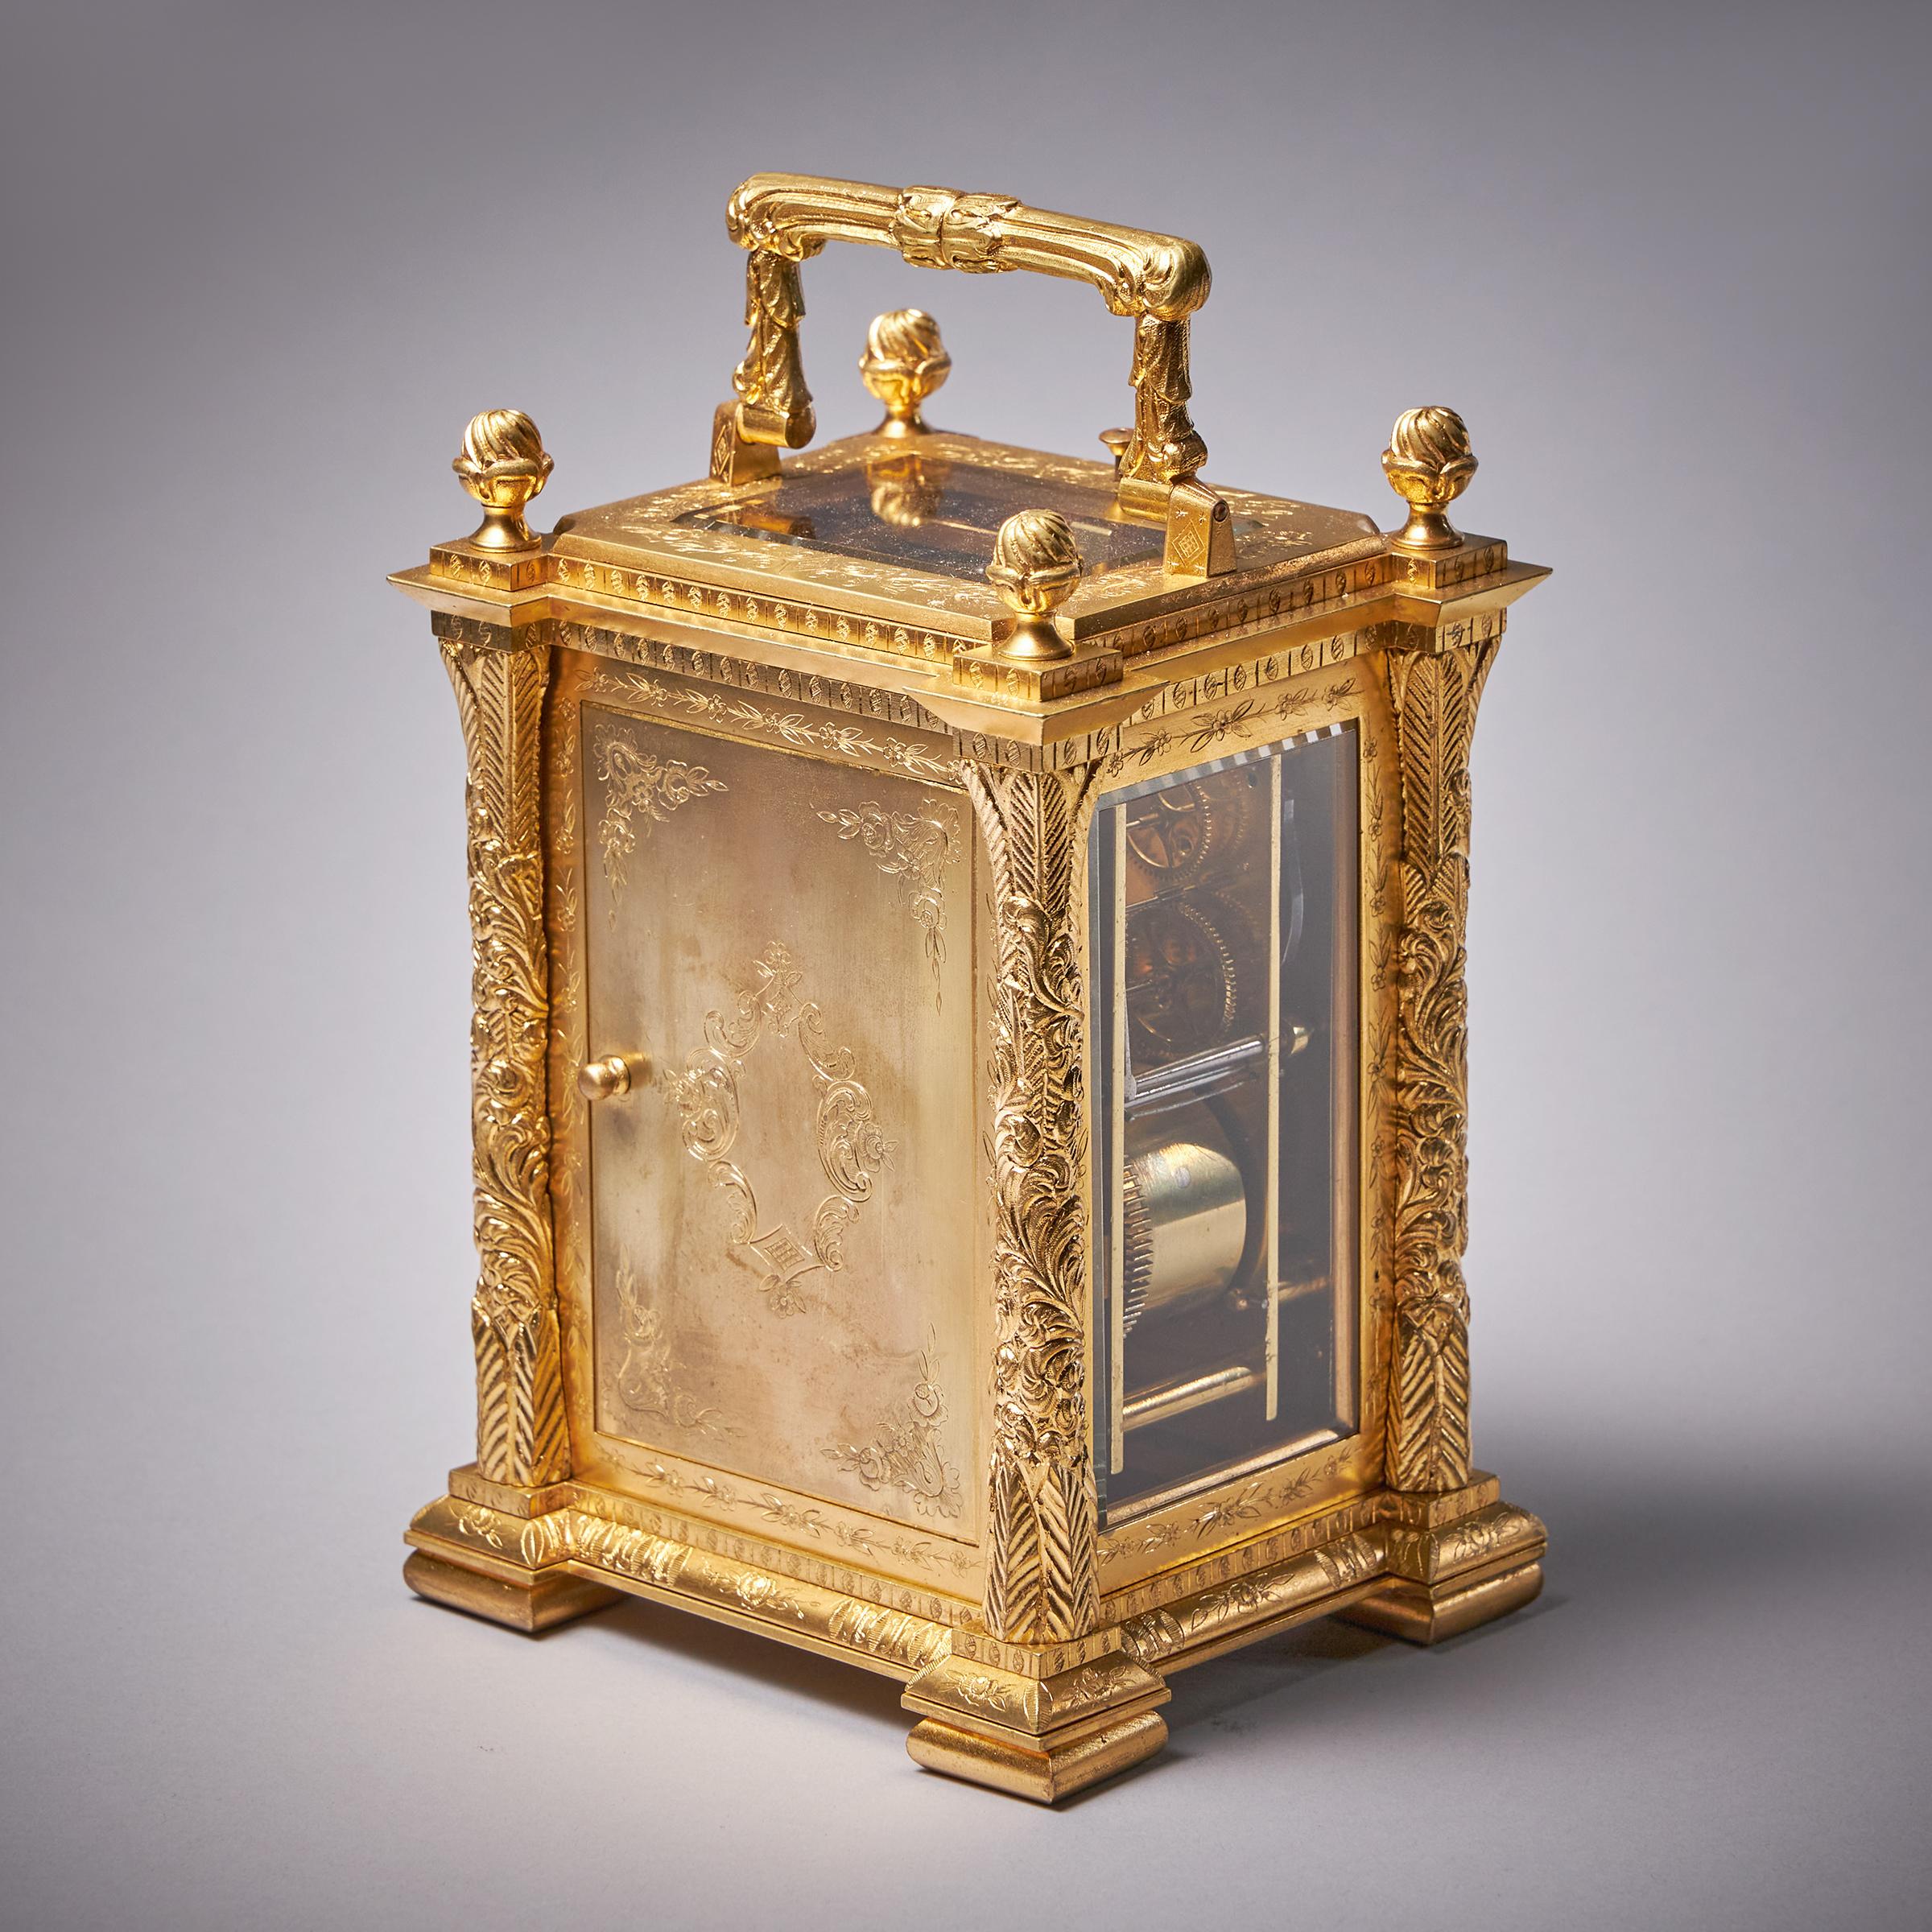 19th Century Eight Day Gilt Brass Carriage Clock with Alarm by Orange, Paris 5